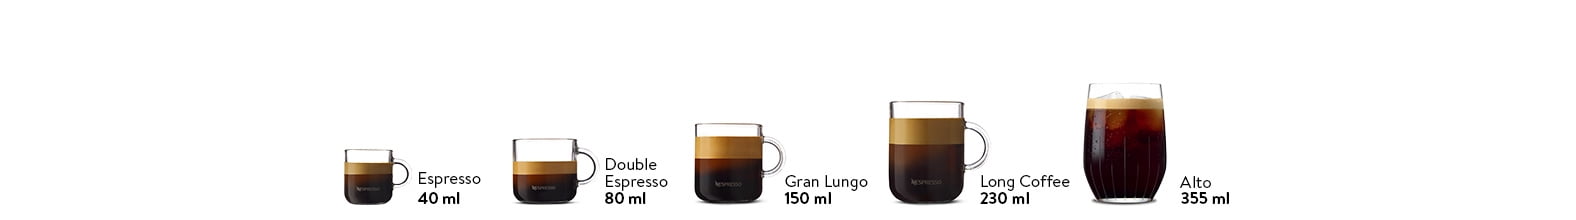 Nespresso - 5 cup sizes